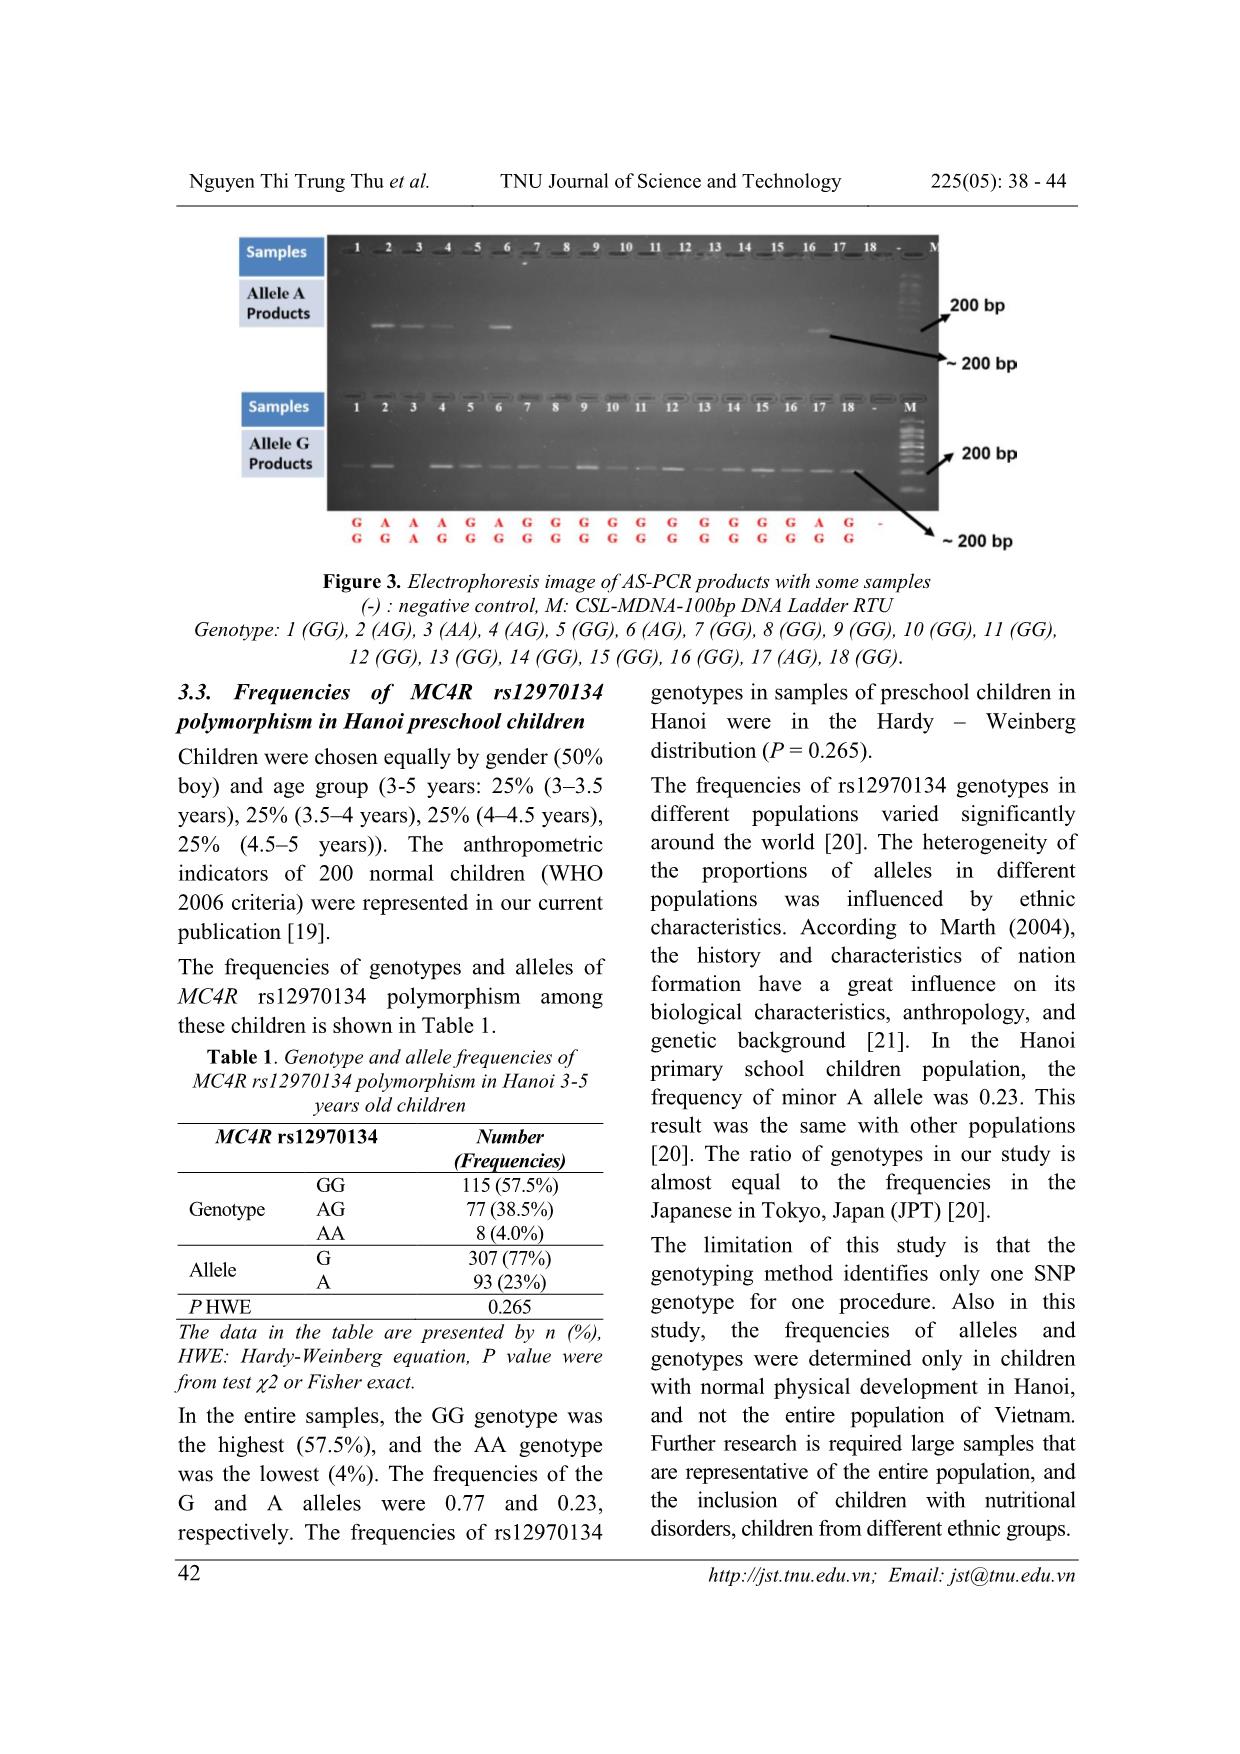 Genotyping method and frequency of single nucleotide polymorphism rs12970134 near melanocortin-4 receptor genotypes in hanoi preschool chidren population trang 5